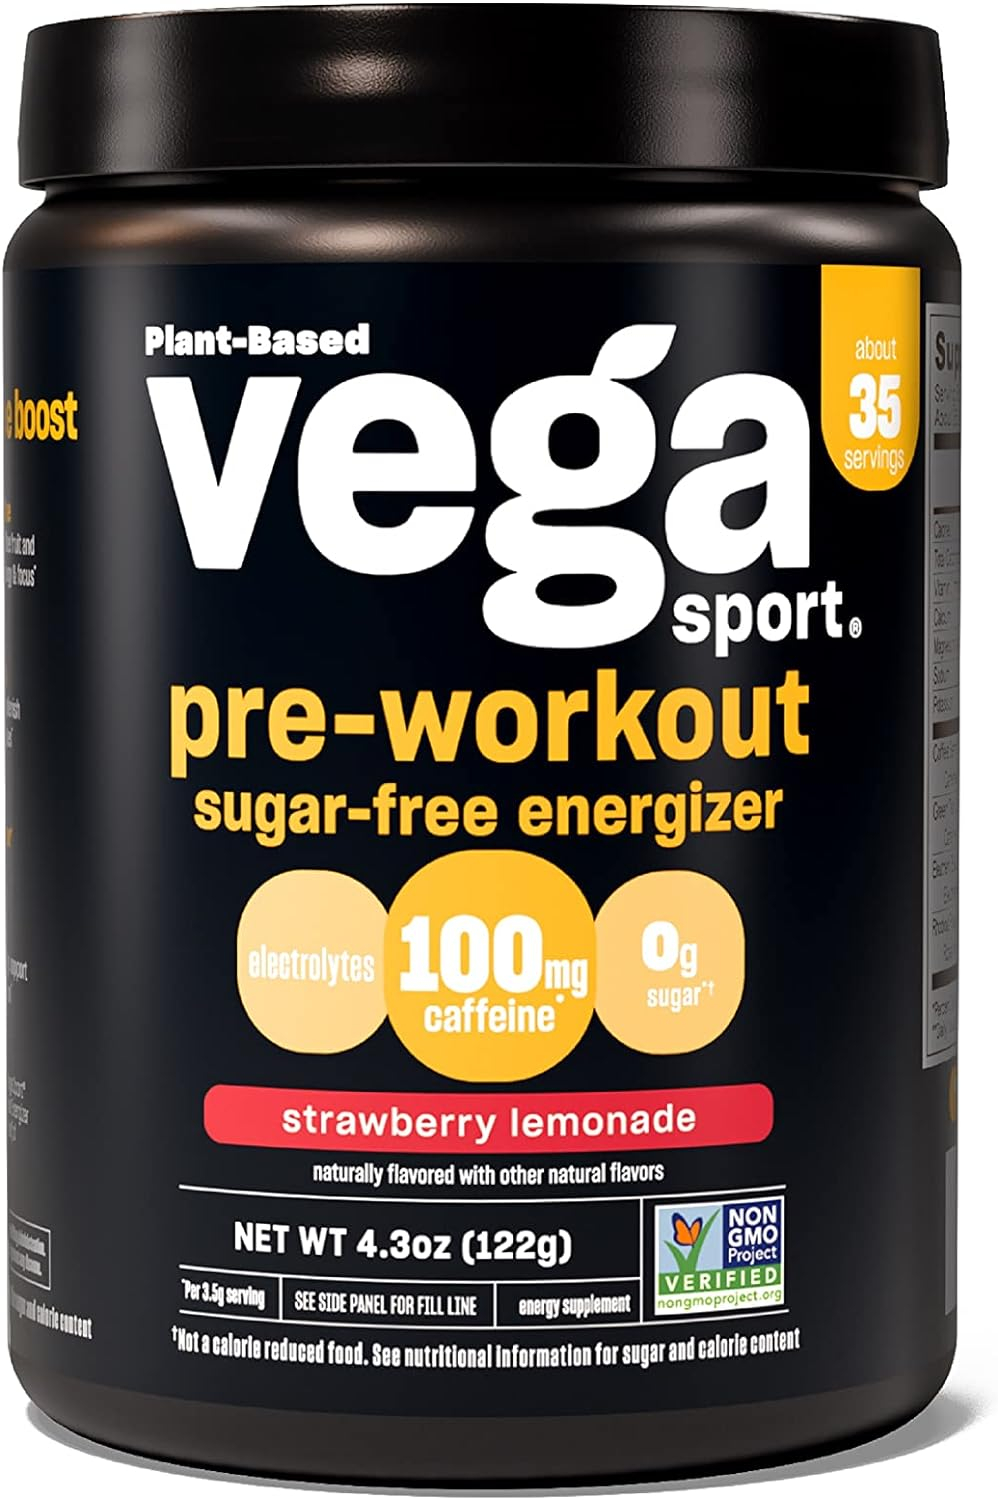 Vega Sport Sugar Free Pre-Workout Energizer, Strawberry Lemonade - Pre Workout Powder for Women  Men, Supports Energy and Focus, Electrolytes, Vegan, Keto, Gluten Free, Non GMO, 4.3 oz